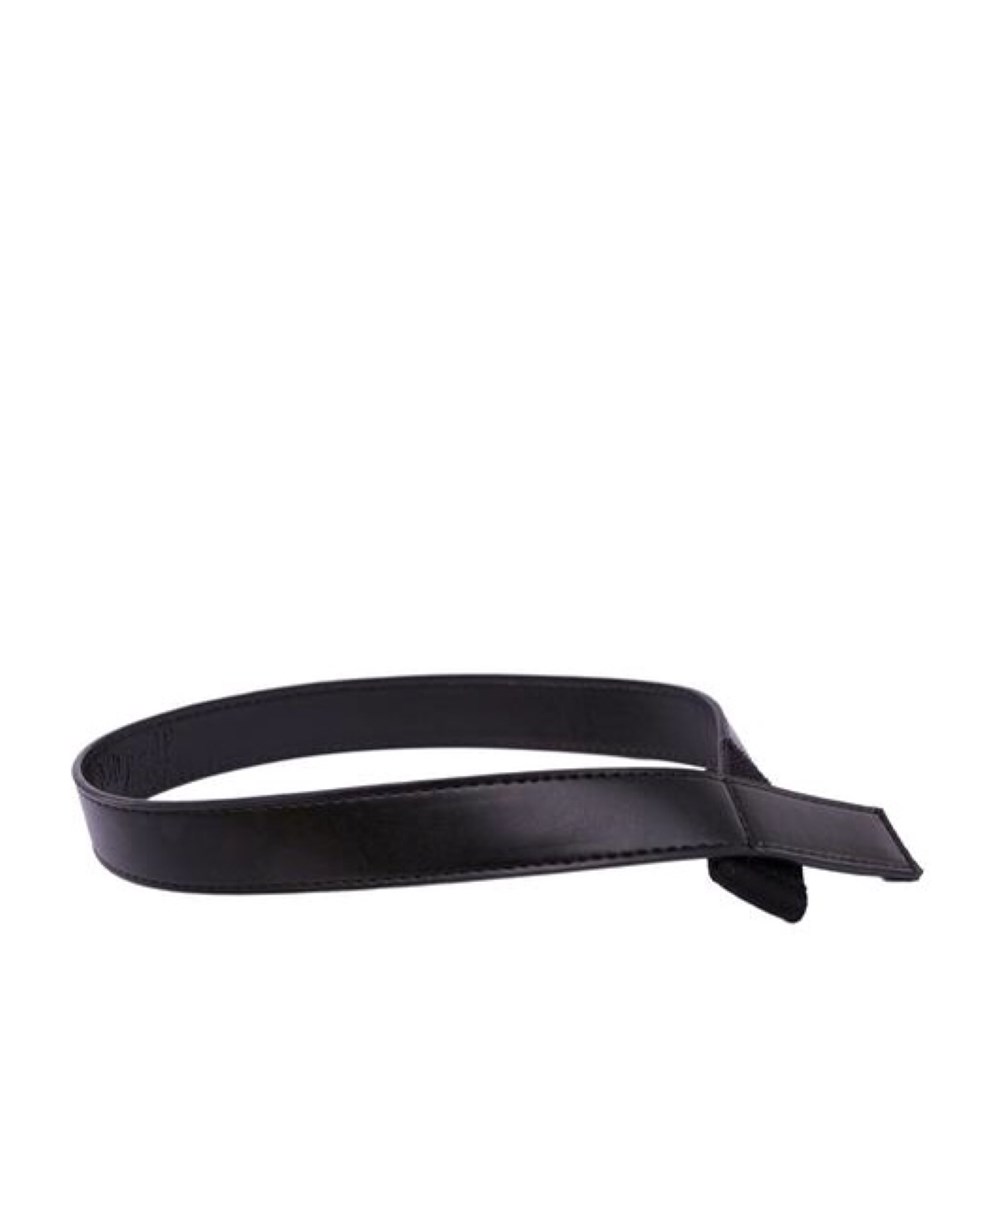 Myself Belts - Leather Belt (Black)